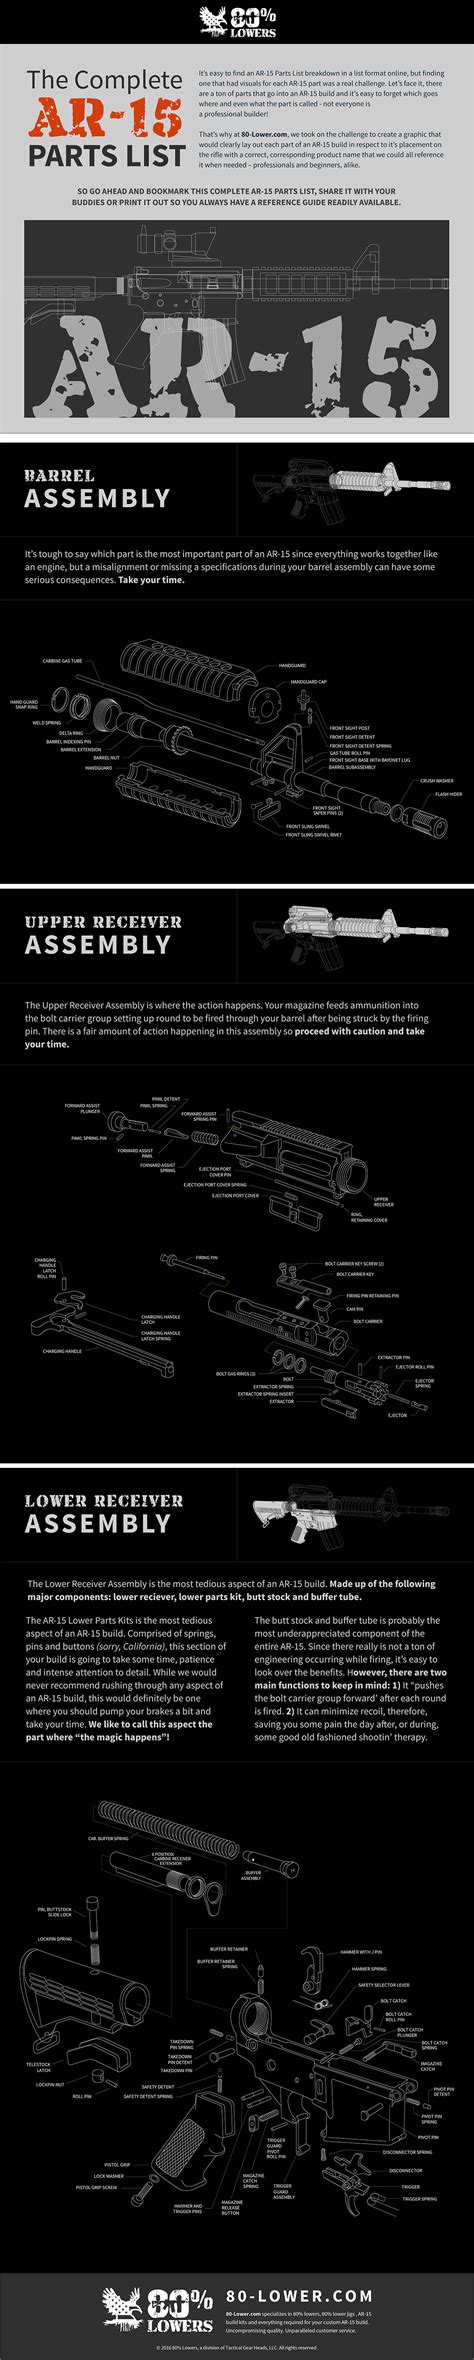 The Complete AR 15 Parts List & AR 15 Build List [Infographic] - 80% Lower Tactical Survival ...